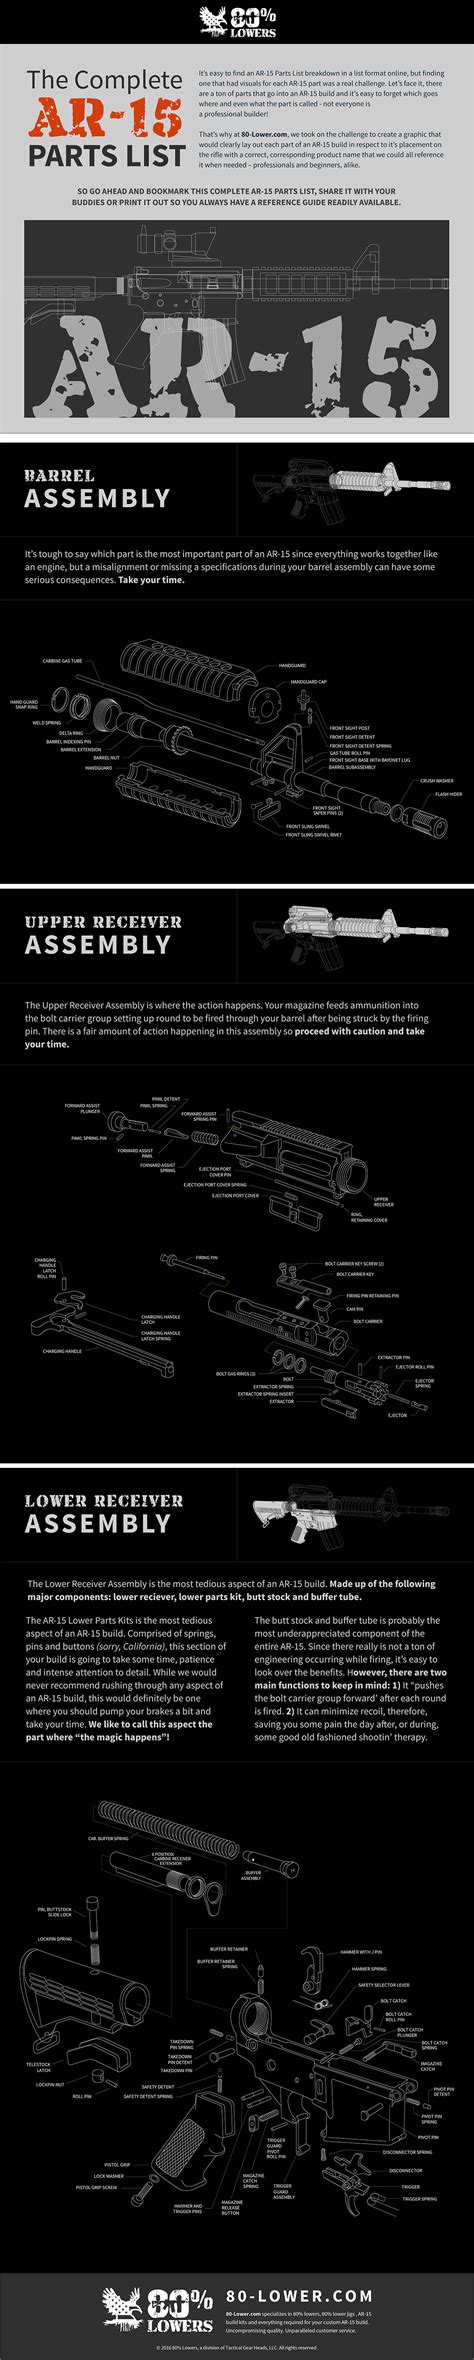 The Complete AR 15 Parts List & AR 15 Build List [Infographic] - 80% Lower Tactical Survival ...